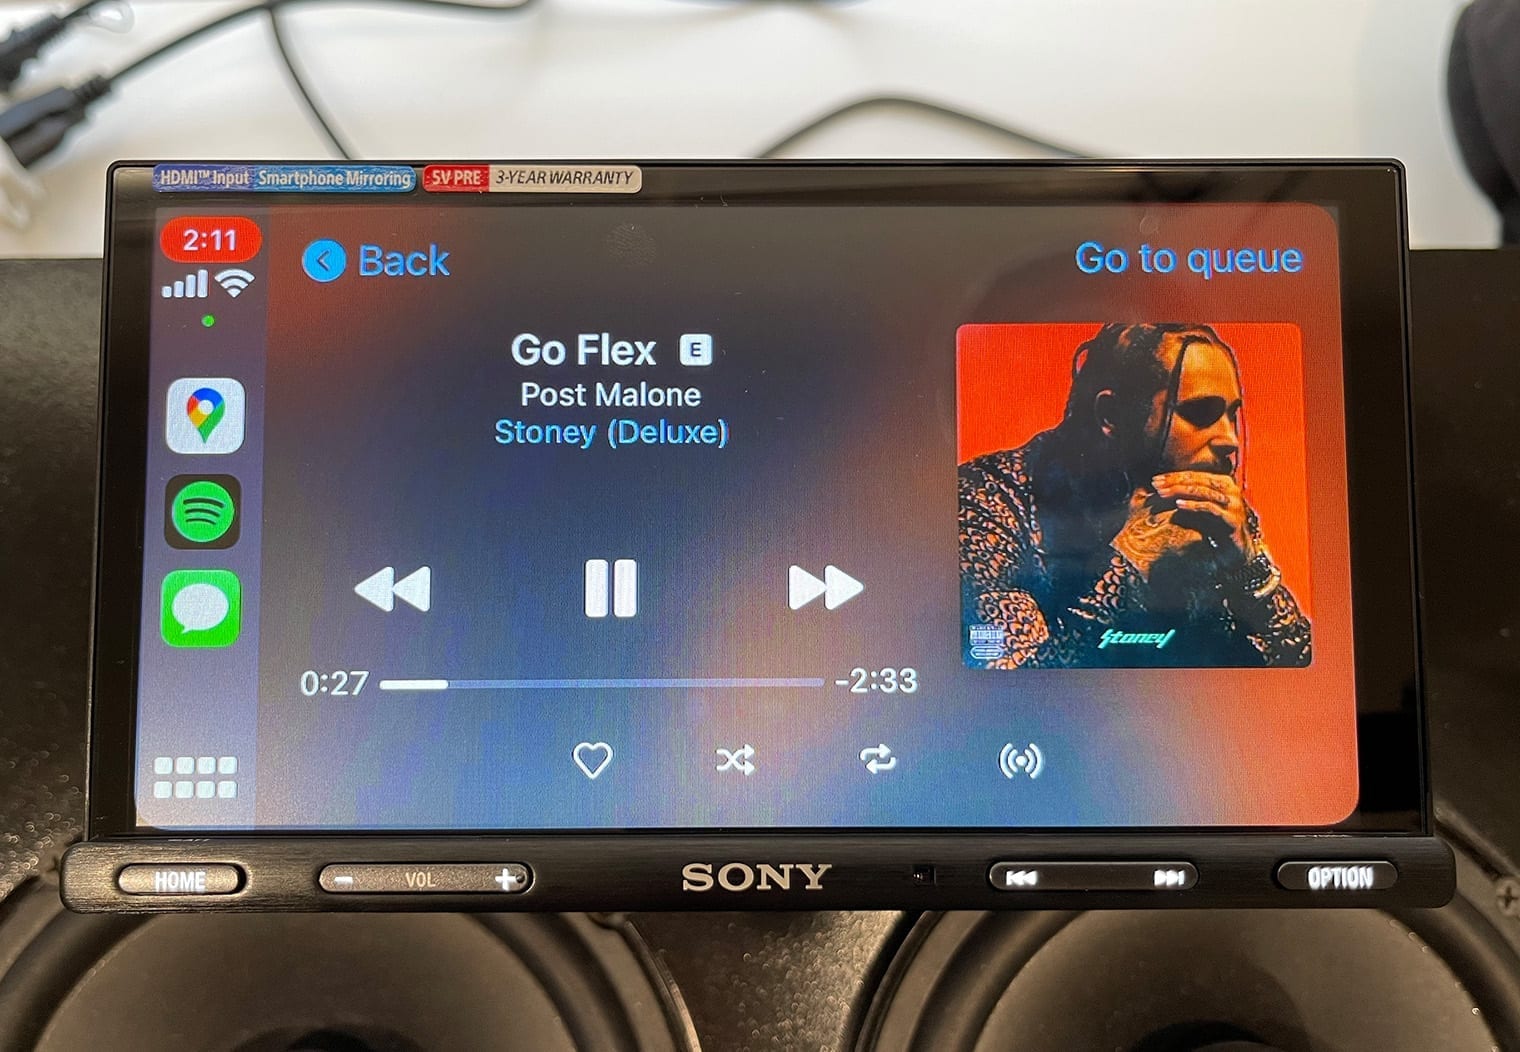 Sony XAV-AX5600 spotify song